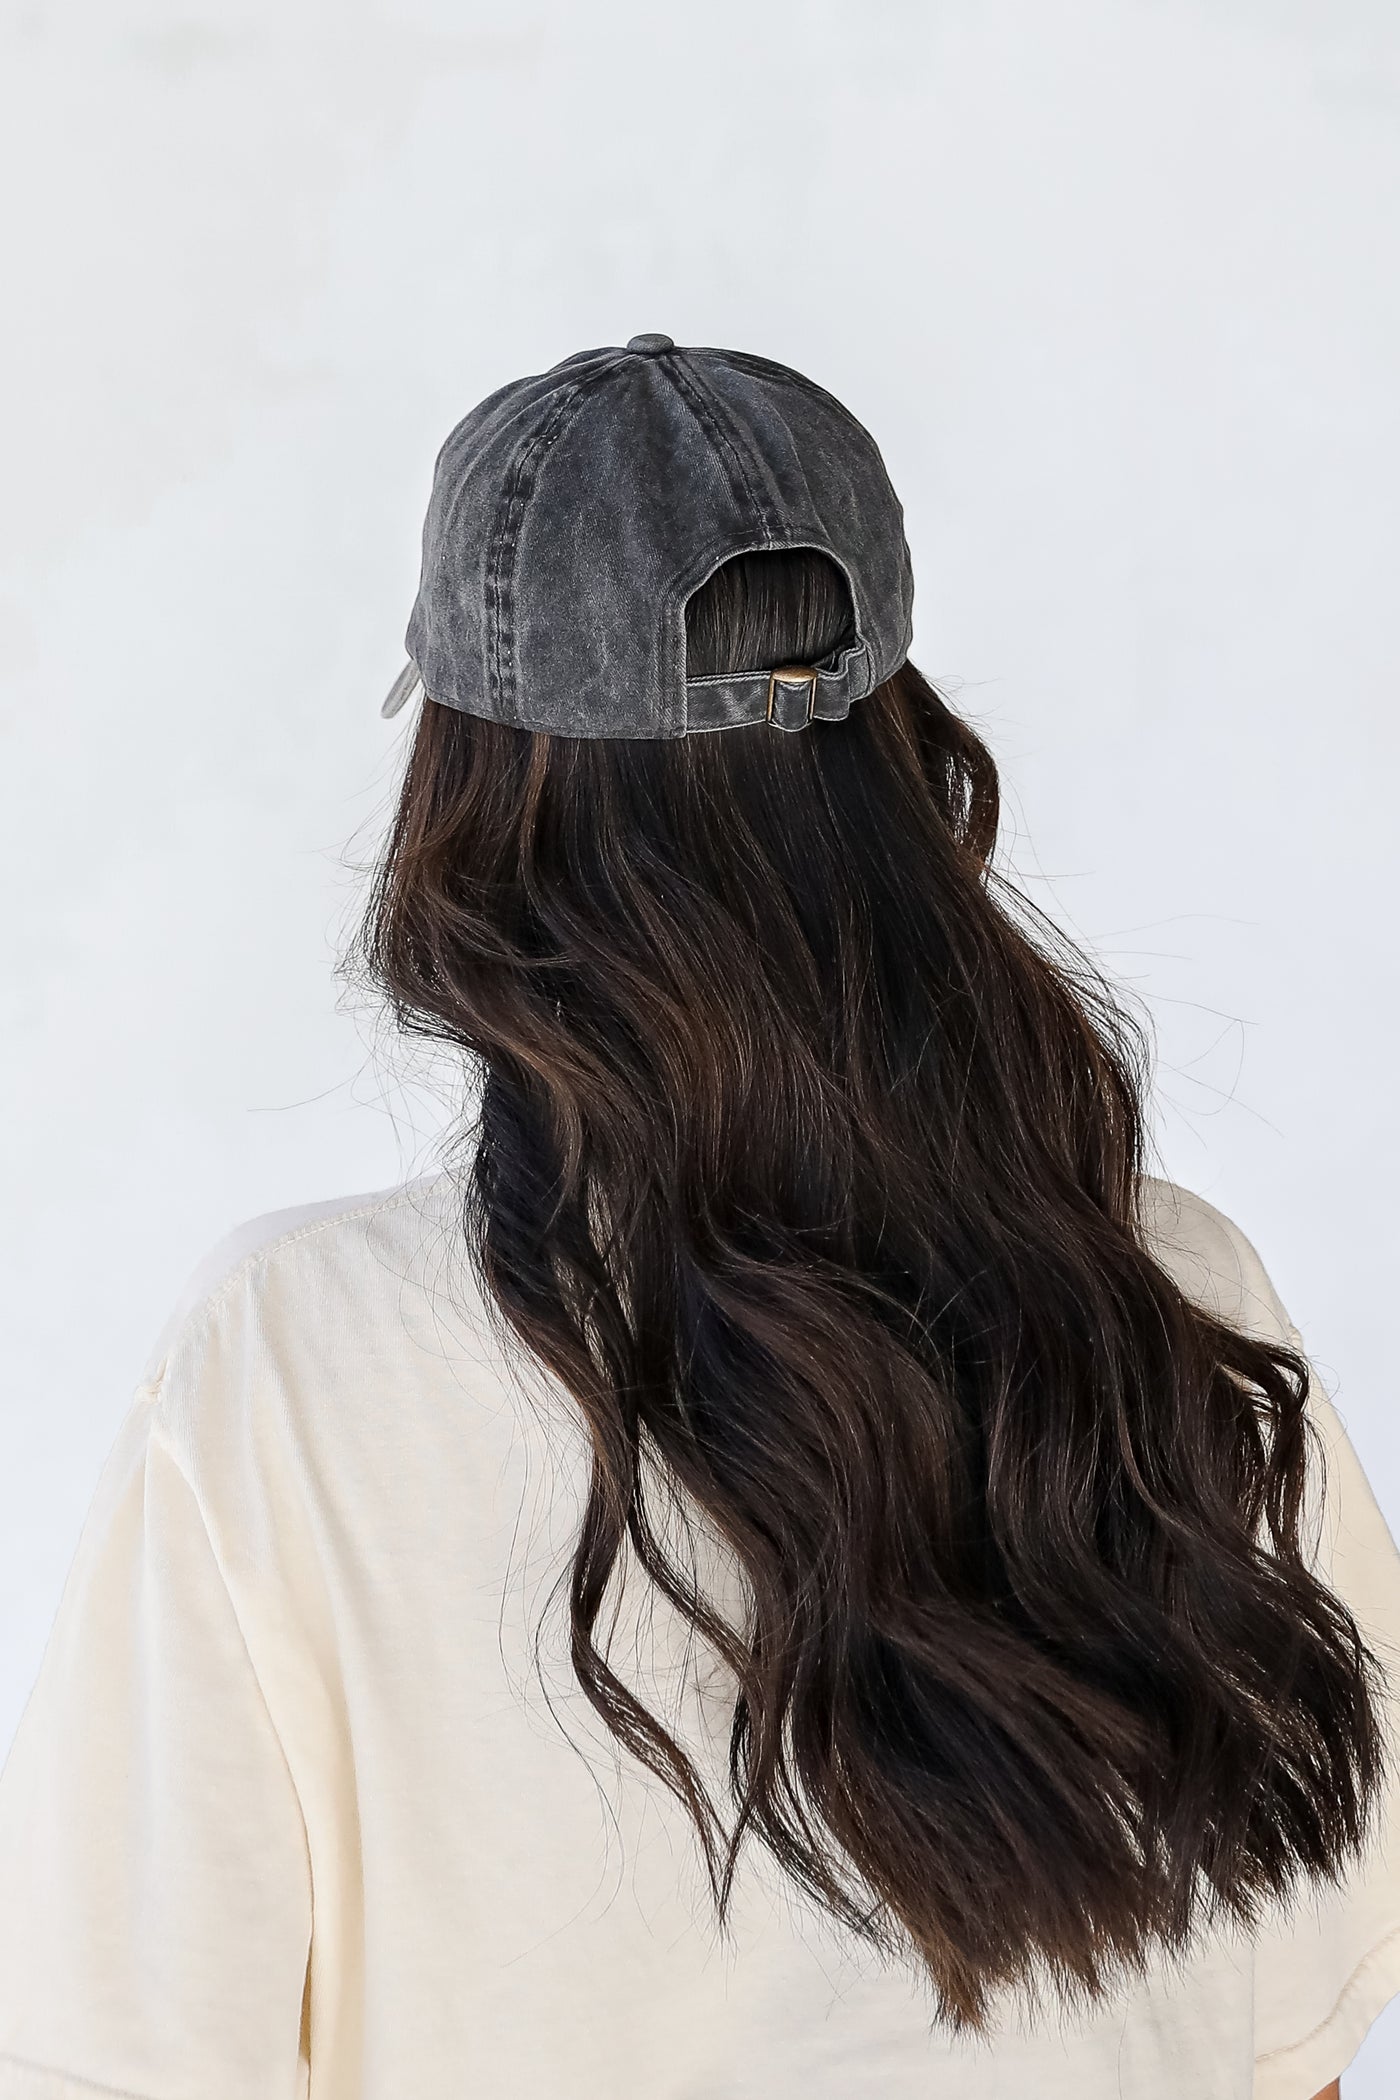 Dahlonega Embroidered Hat in black back view